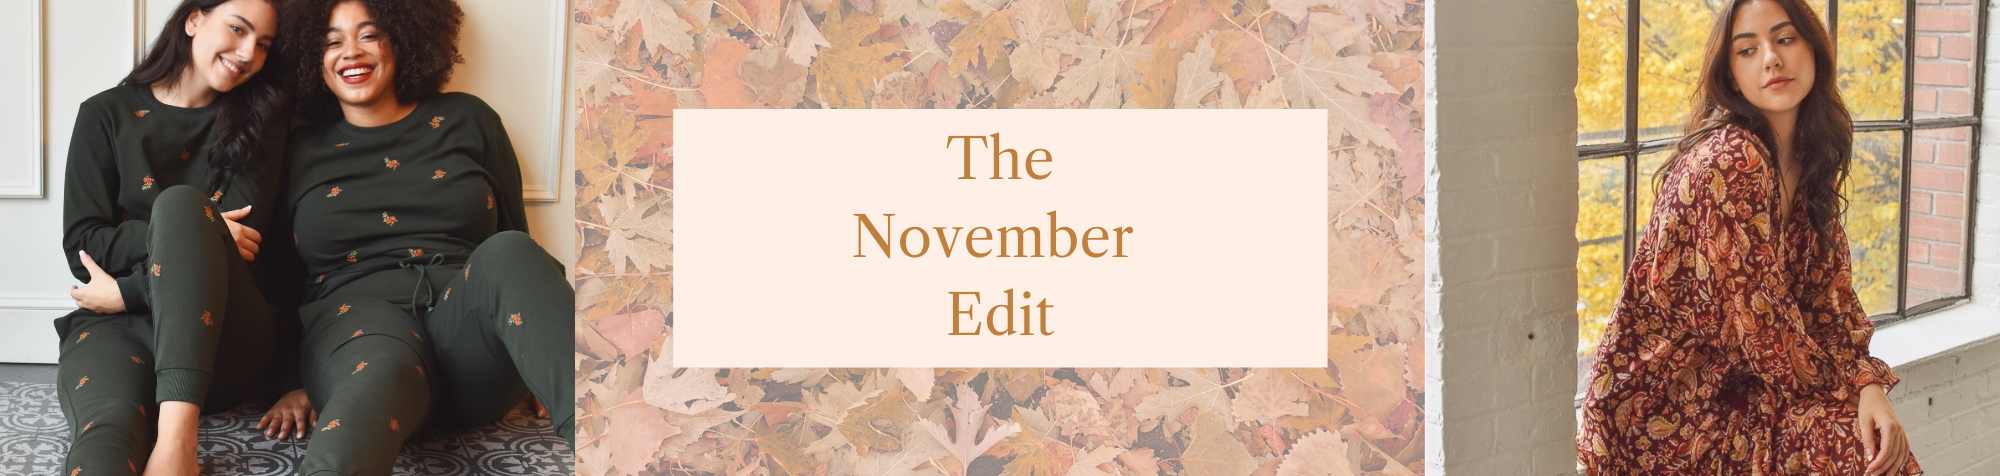 The November Edit